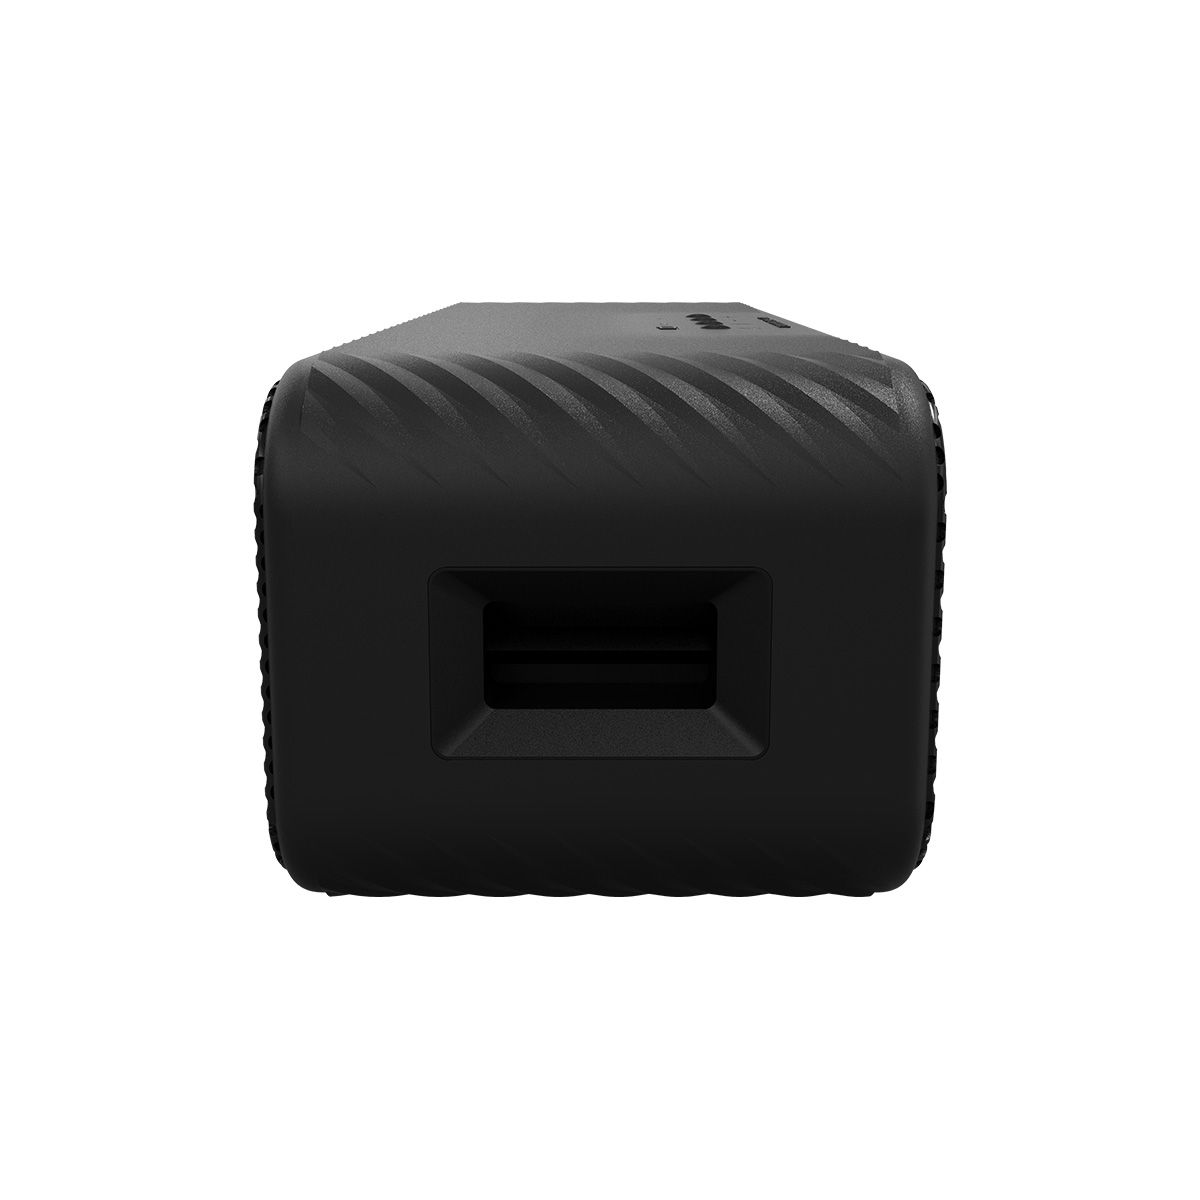 Klipsch Detroit Large Portable Bluetooth Speaker side view